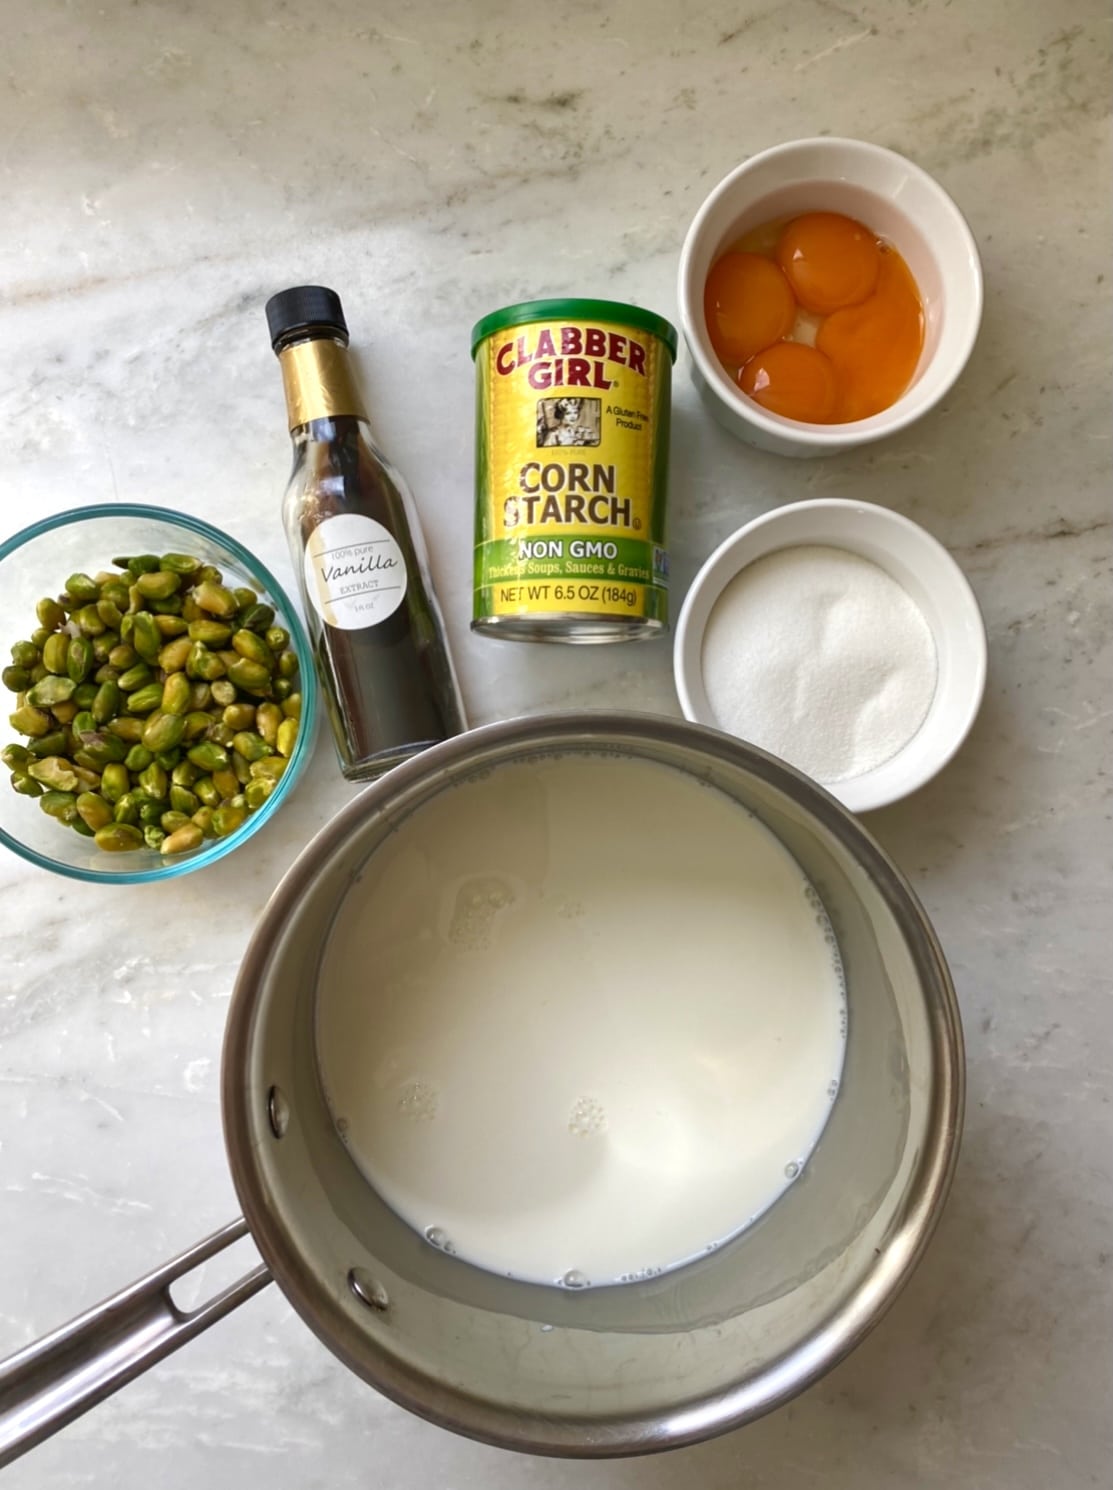 Ingredients for the pistachio pastry cream